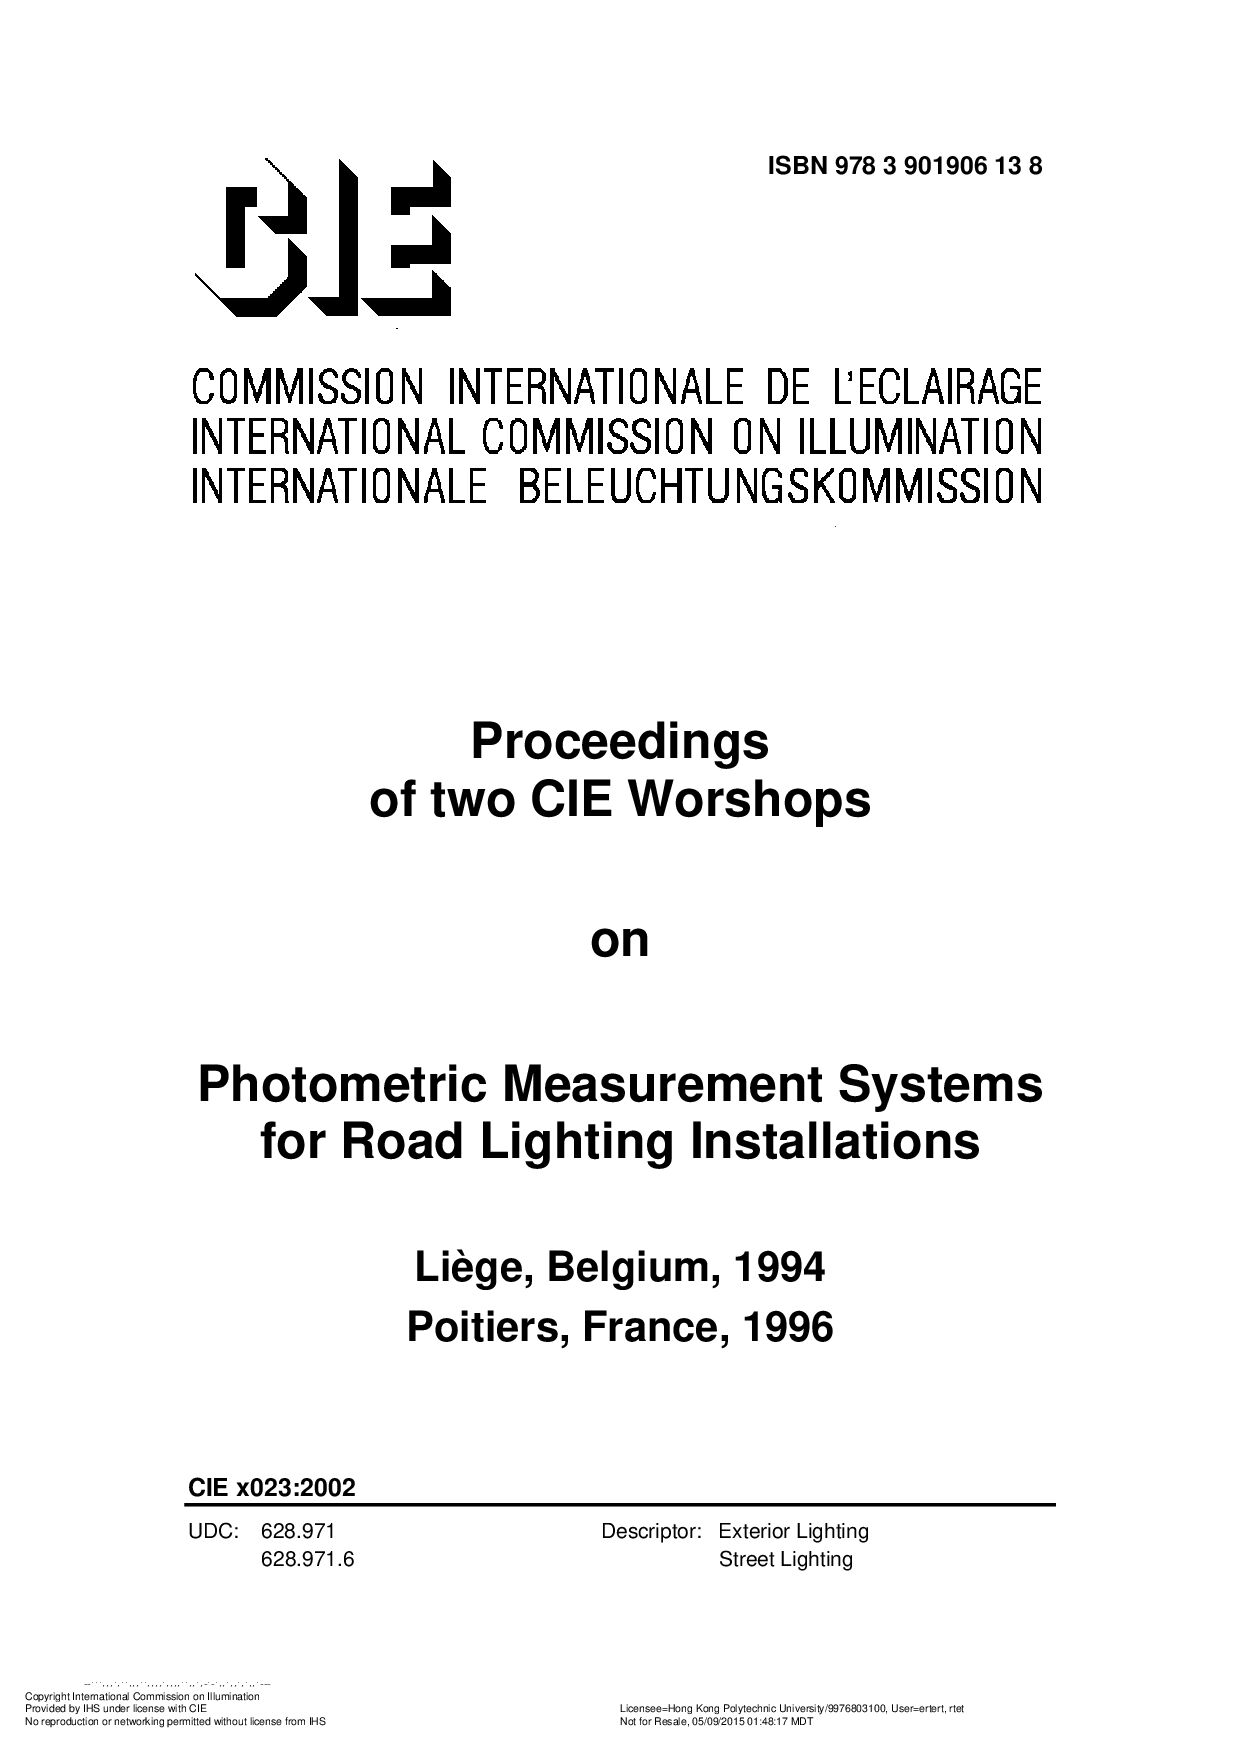 CIE X023-2002封面图